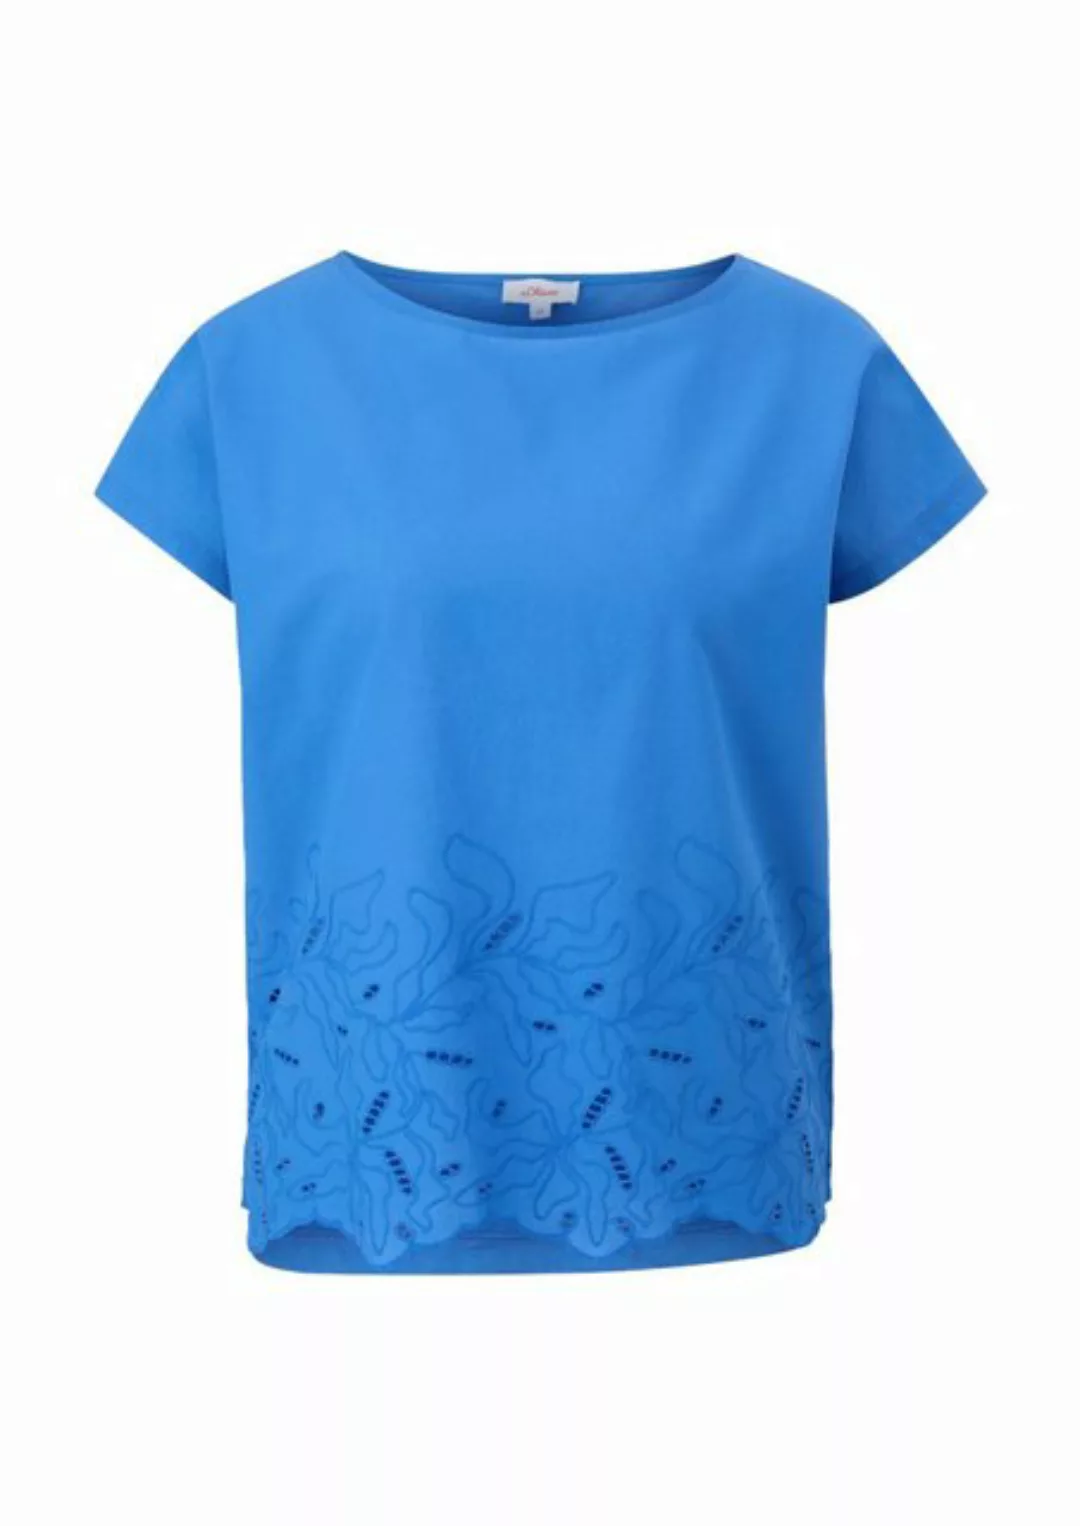 s.Oliver T-Shirt S.Oliver red Label women / Da.Shirt, Polo / T-Shirt günstig online kaufen